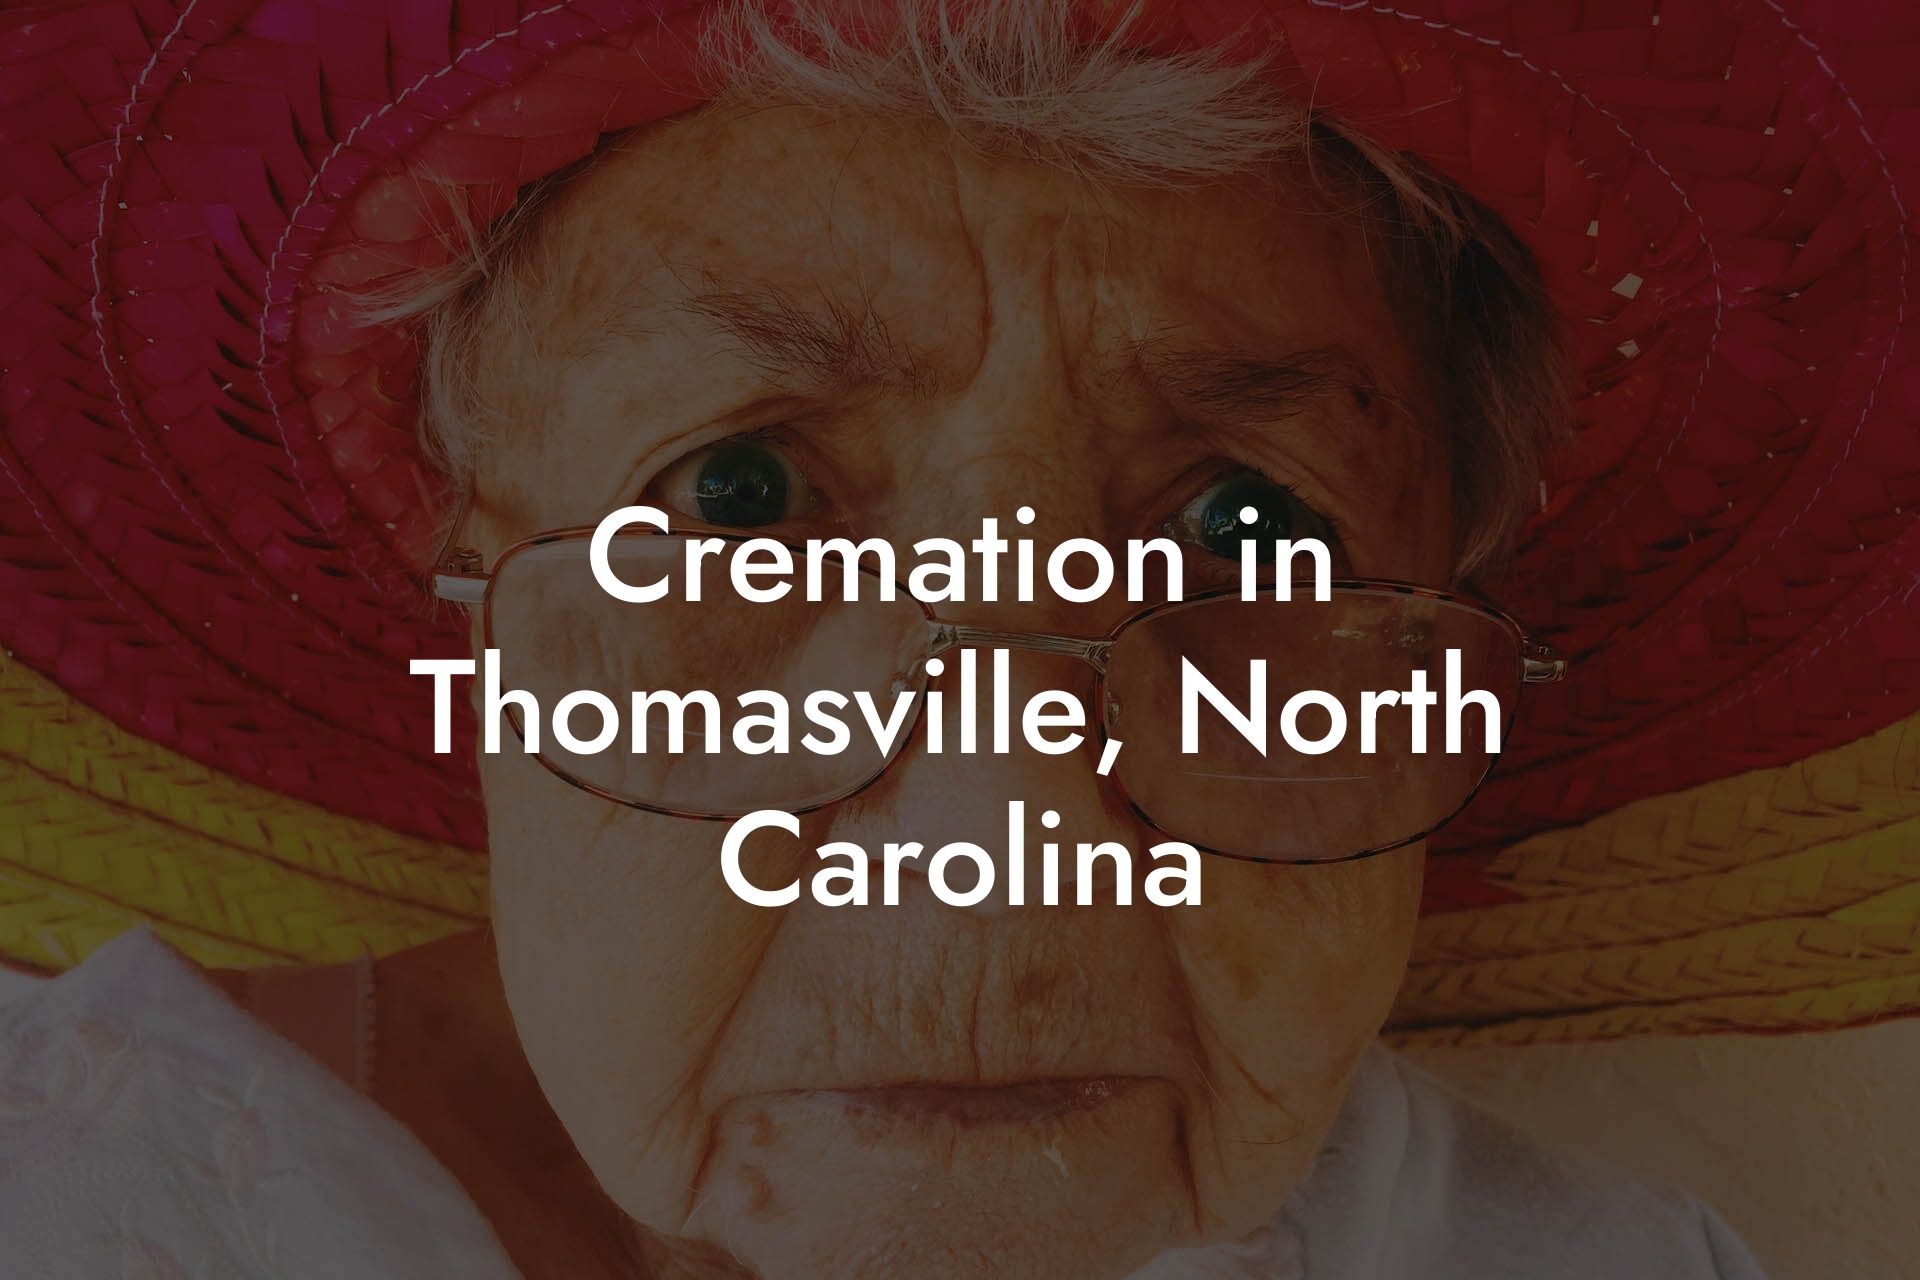 Cremation in Thomasville, North Carolina